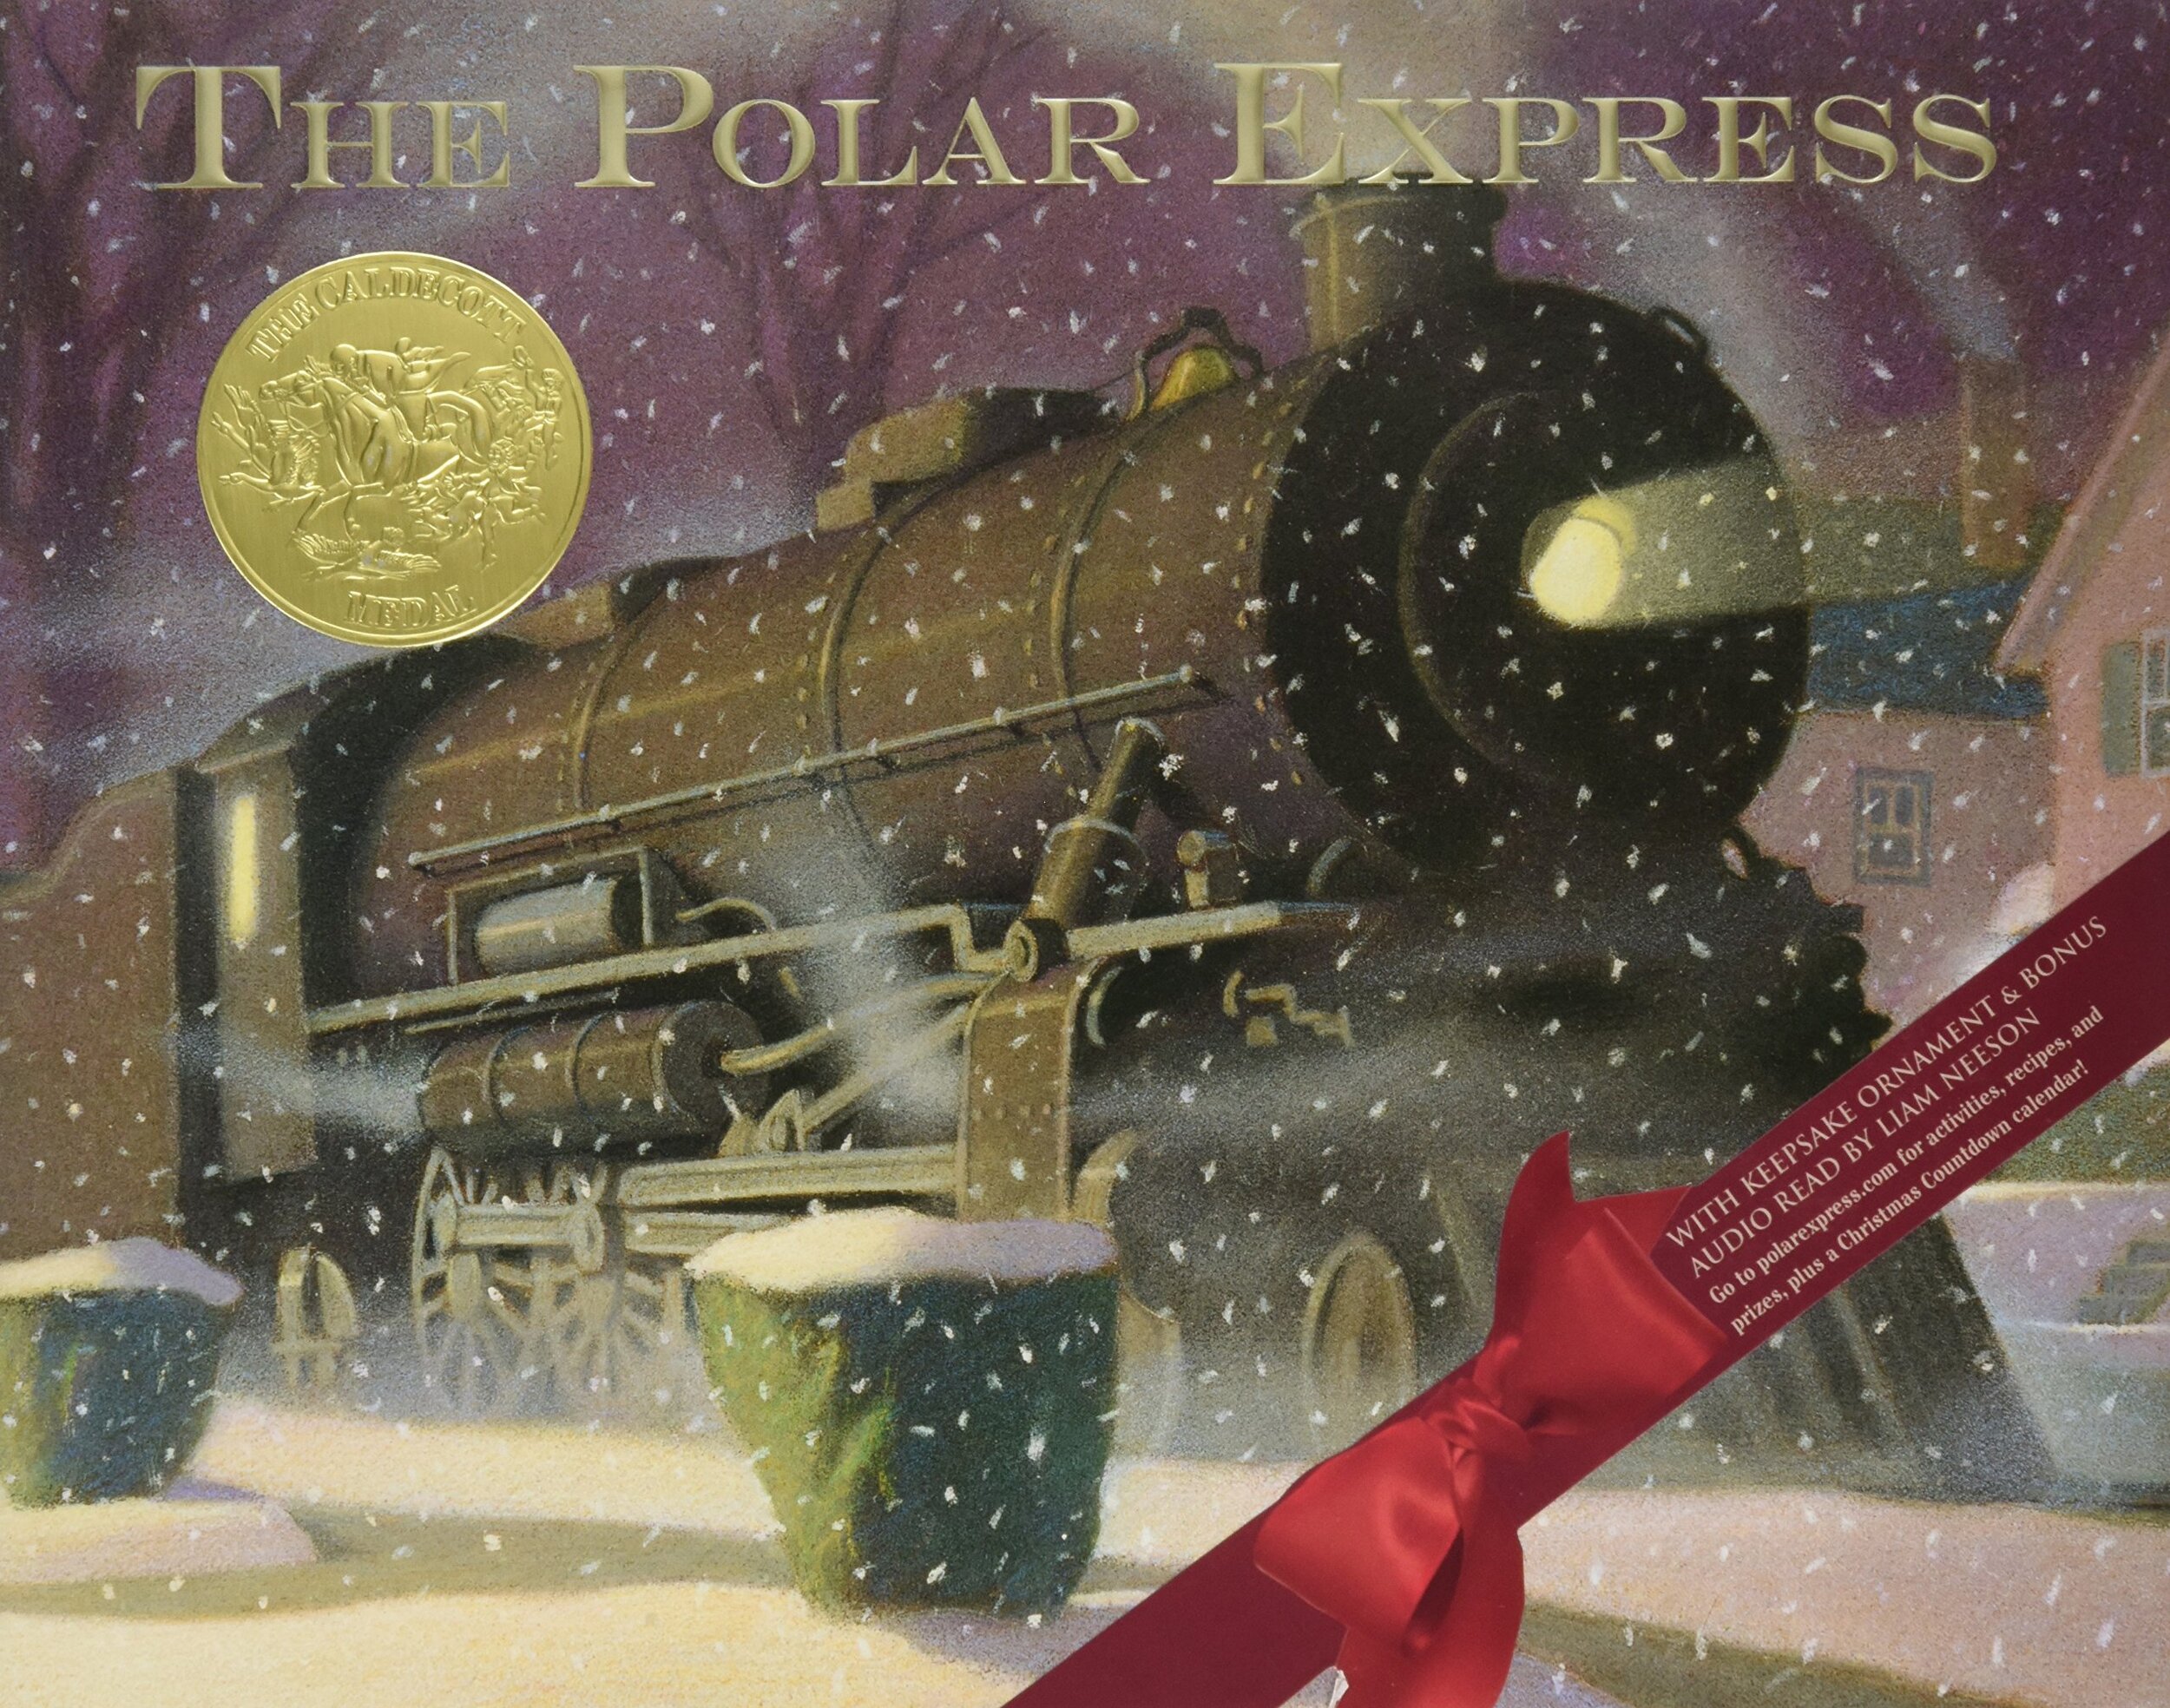 The Polar Express.jpg